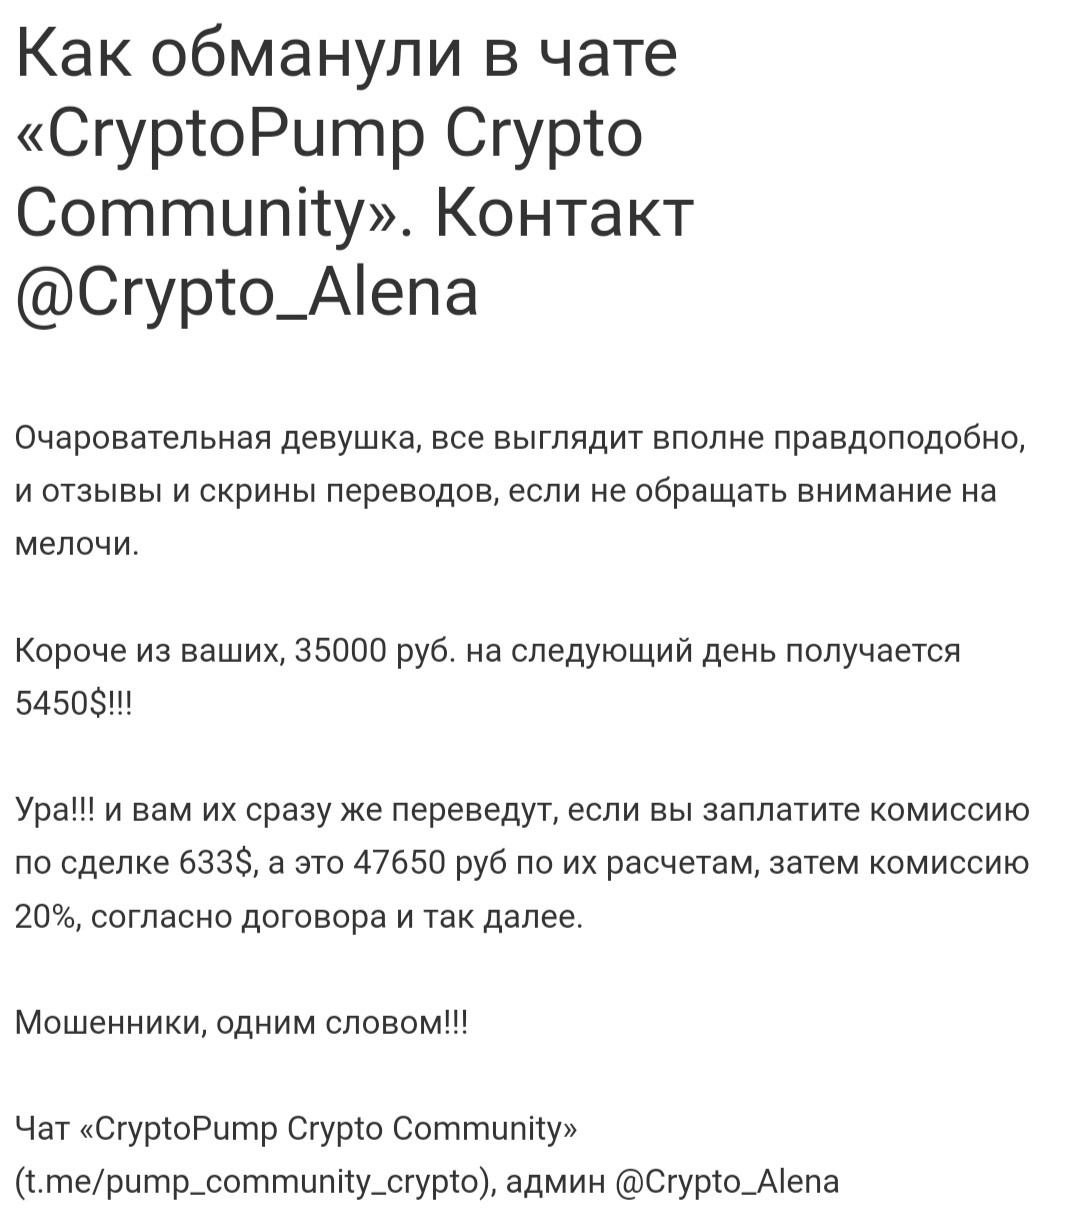 Отзывы о CryptoPump Crypto Community